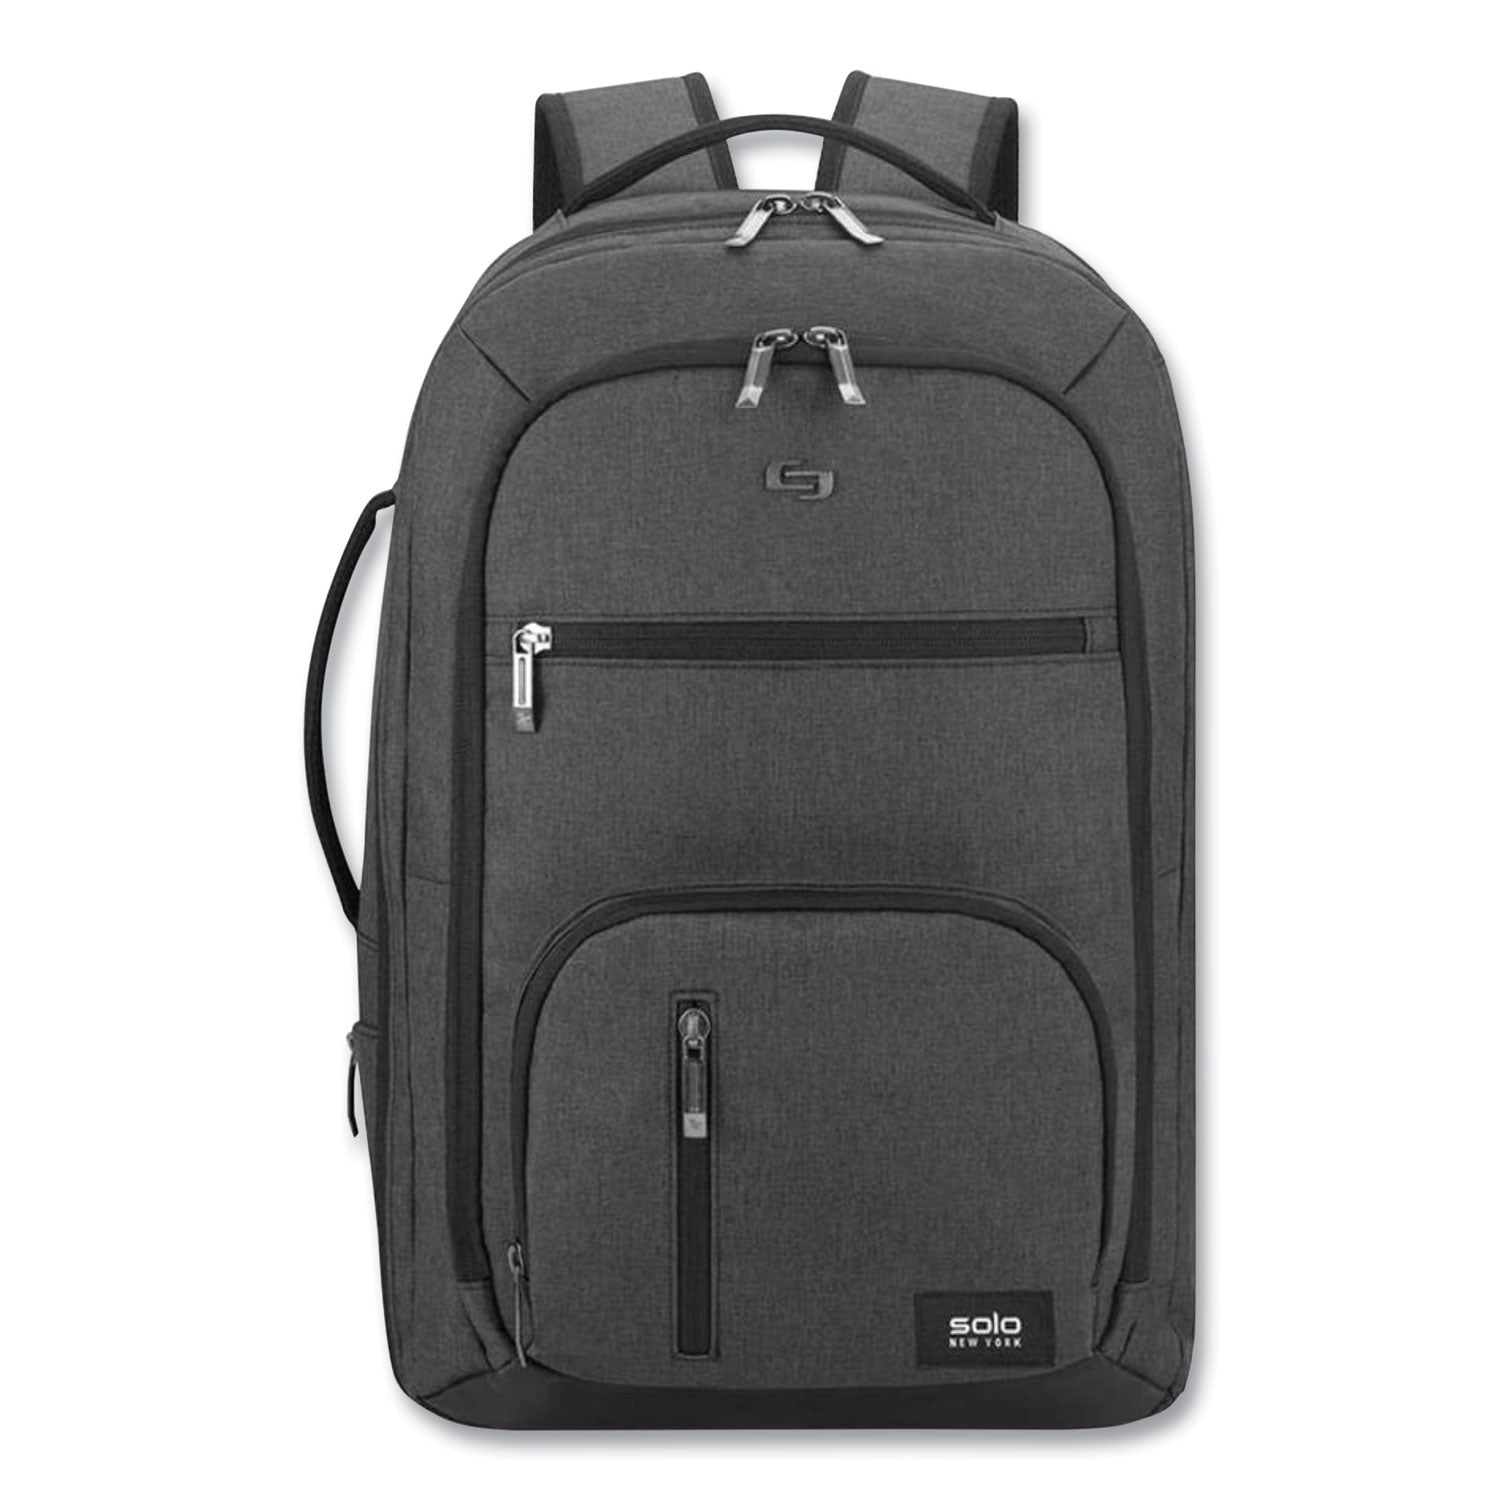 grand-travel-tsa-backpack-173-1188-x-7-x-19-dark-gray_uslubn78010 - 1